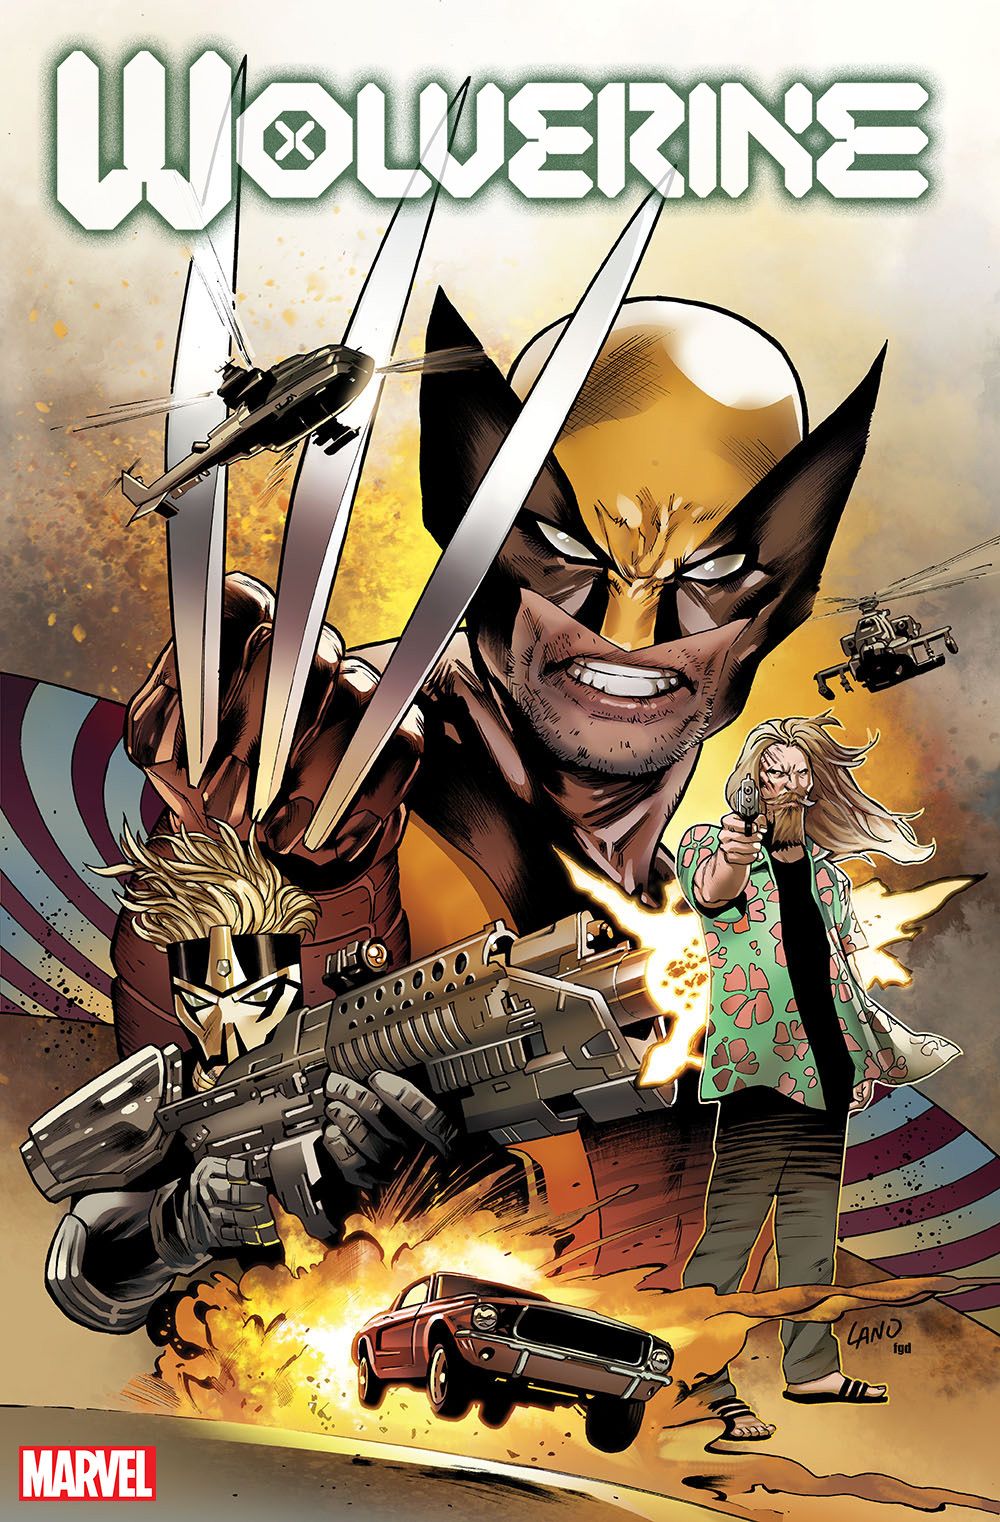 Wolverine #18 Greg Land variant